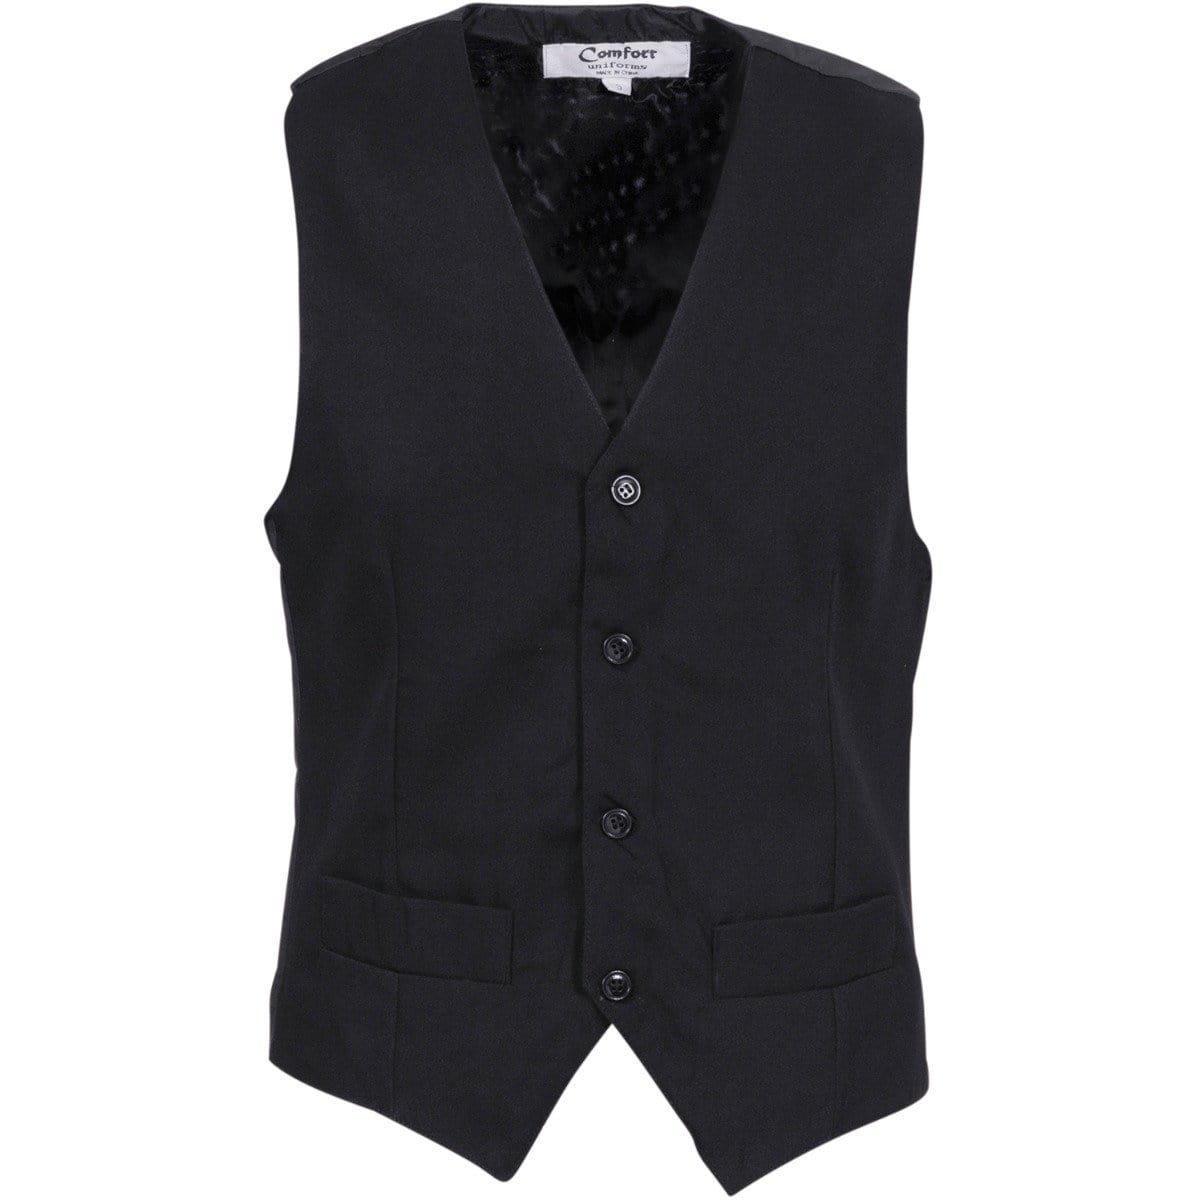 Dnc Workwear Men’s Black Vest - 4301 Hospitality & Chefwear DNC Workwear Black S 